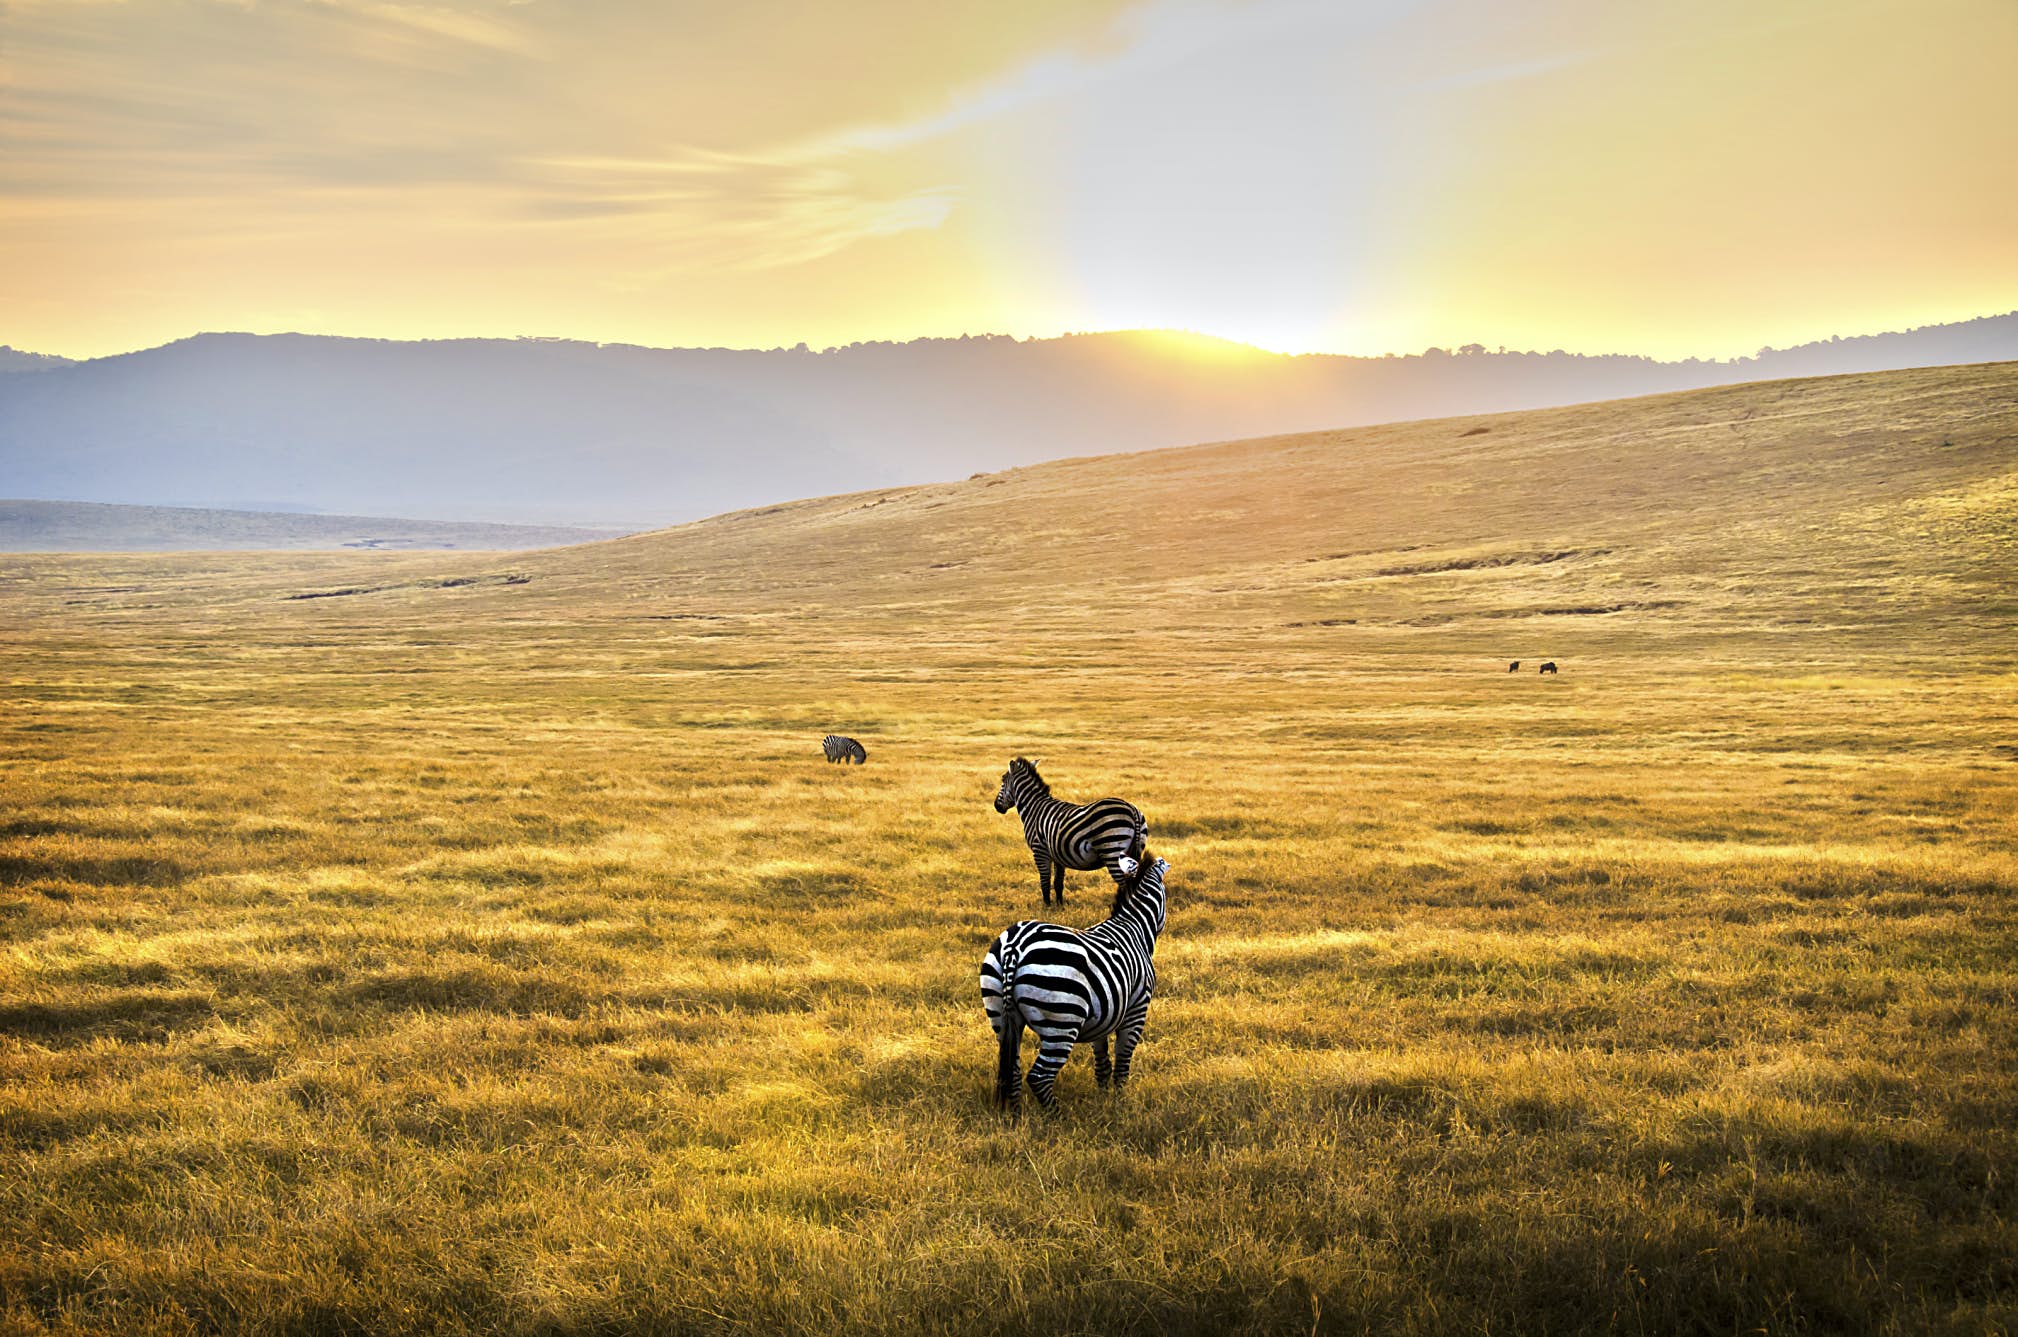 Plains of the Serengeti National Park